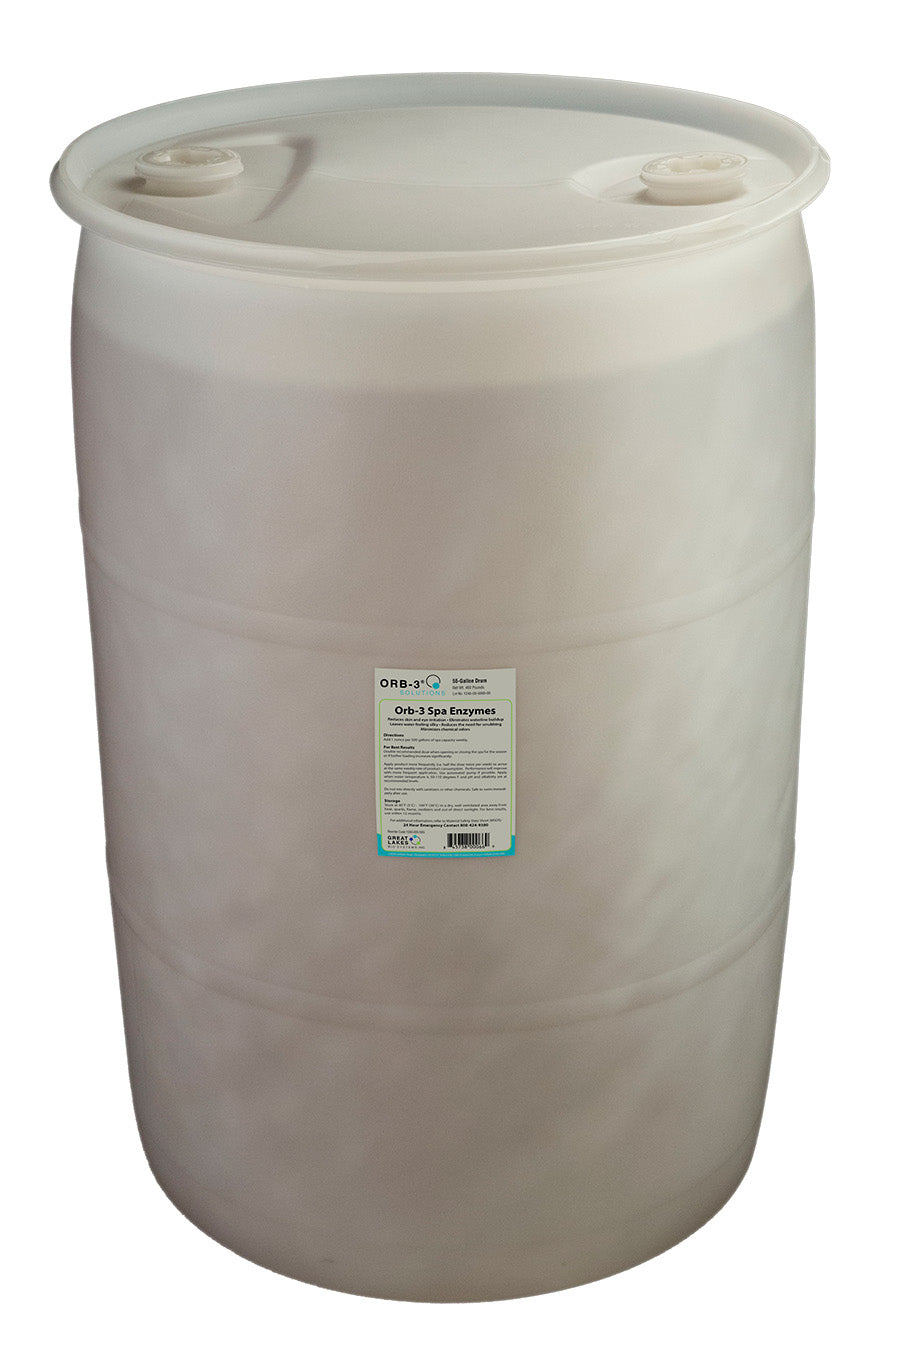 55 gallon drum of Orb-3 Spa Enzymes Y240-000-55G